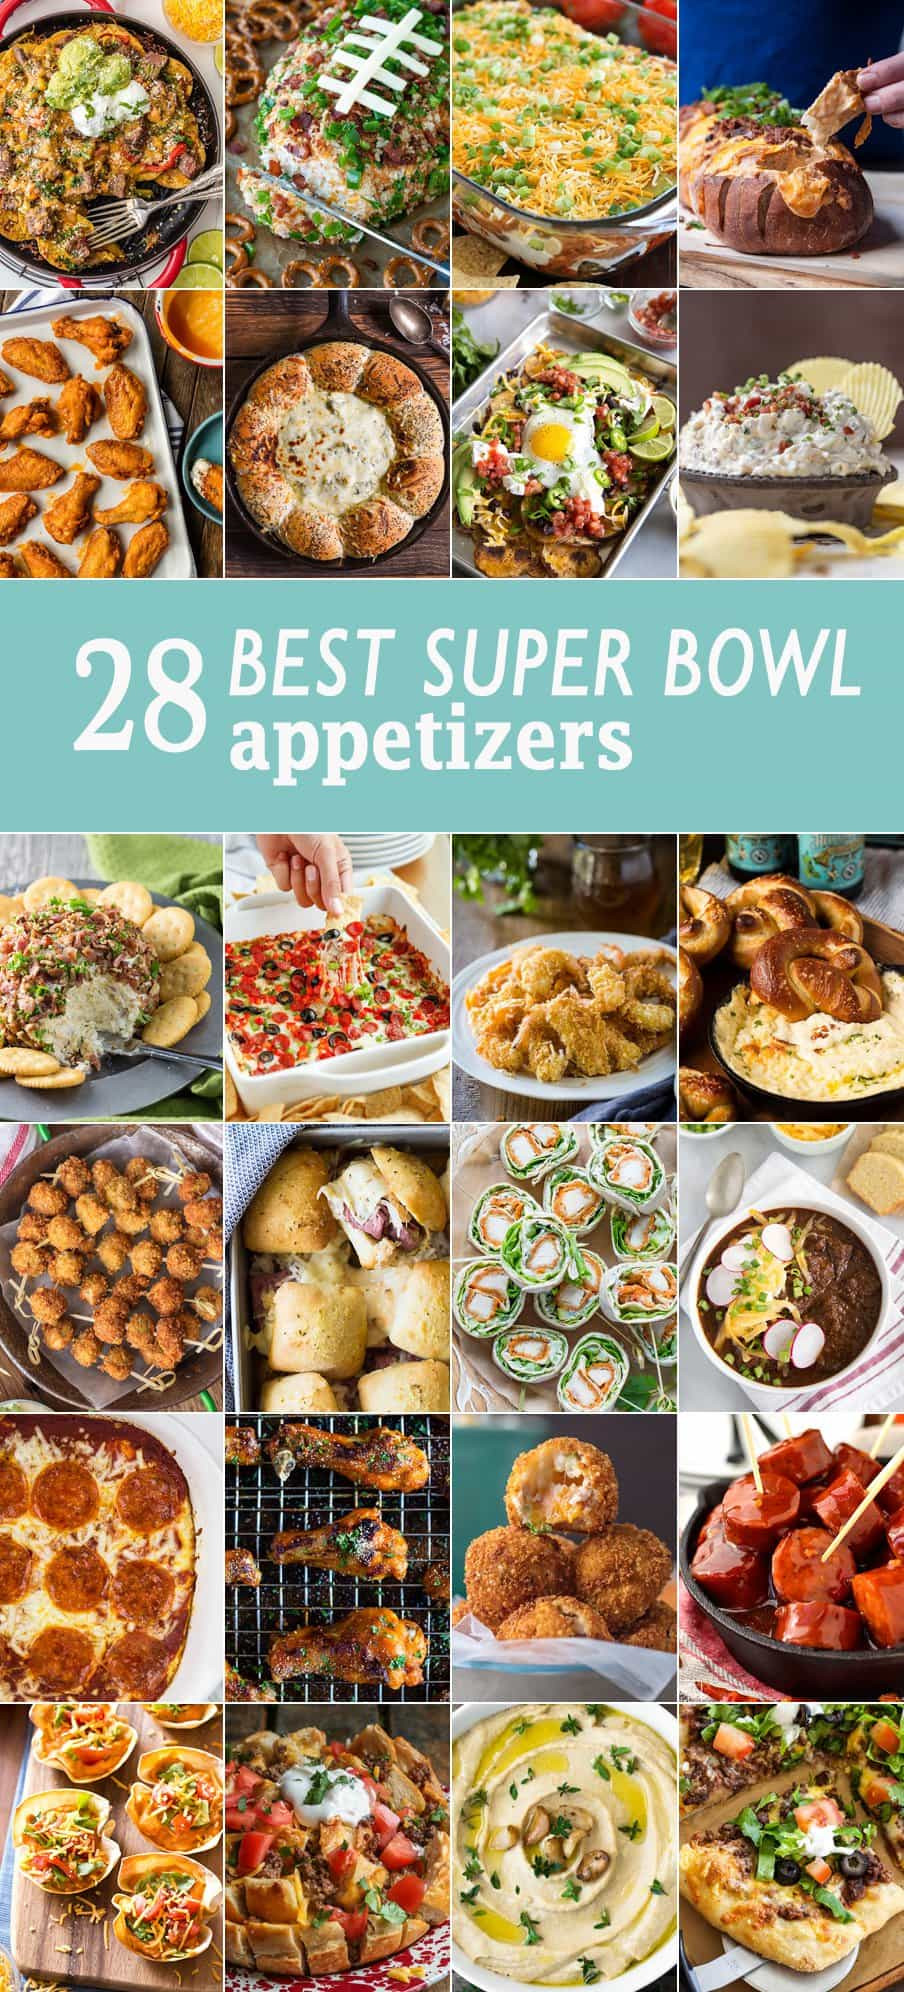 Super Bowl Appetizer Recipes
 10 Best Super Bowl Appetizers The Cookie Rookie